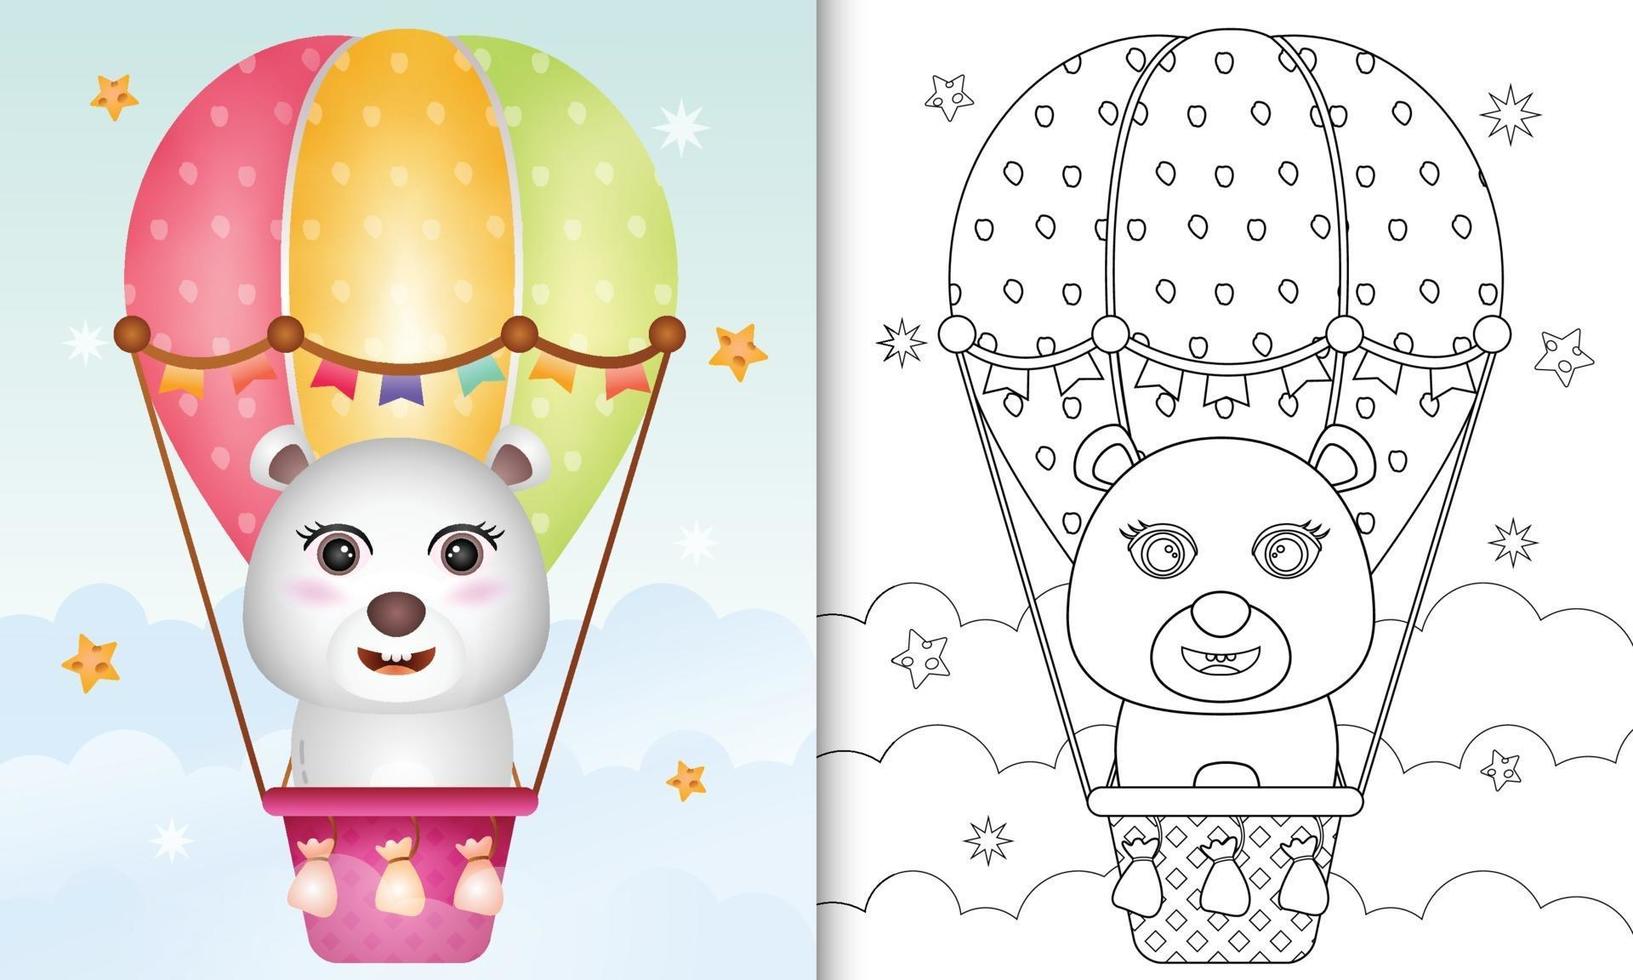 Coloring book for kids with a cute polar bear on hot air balloon vector